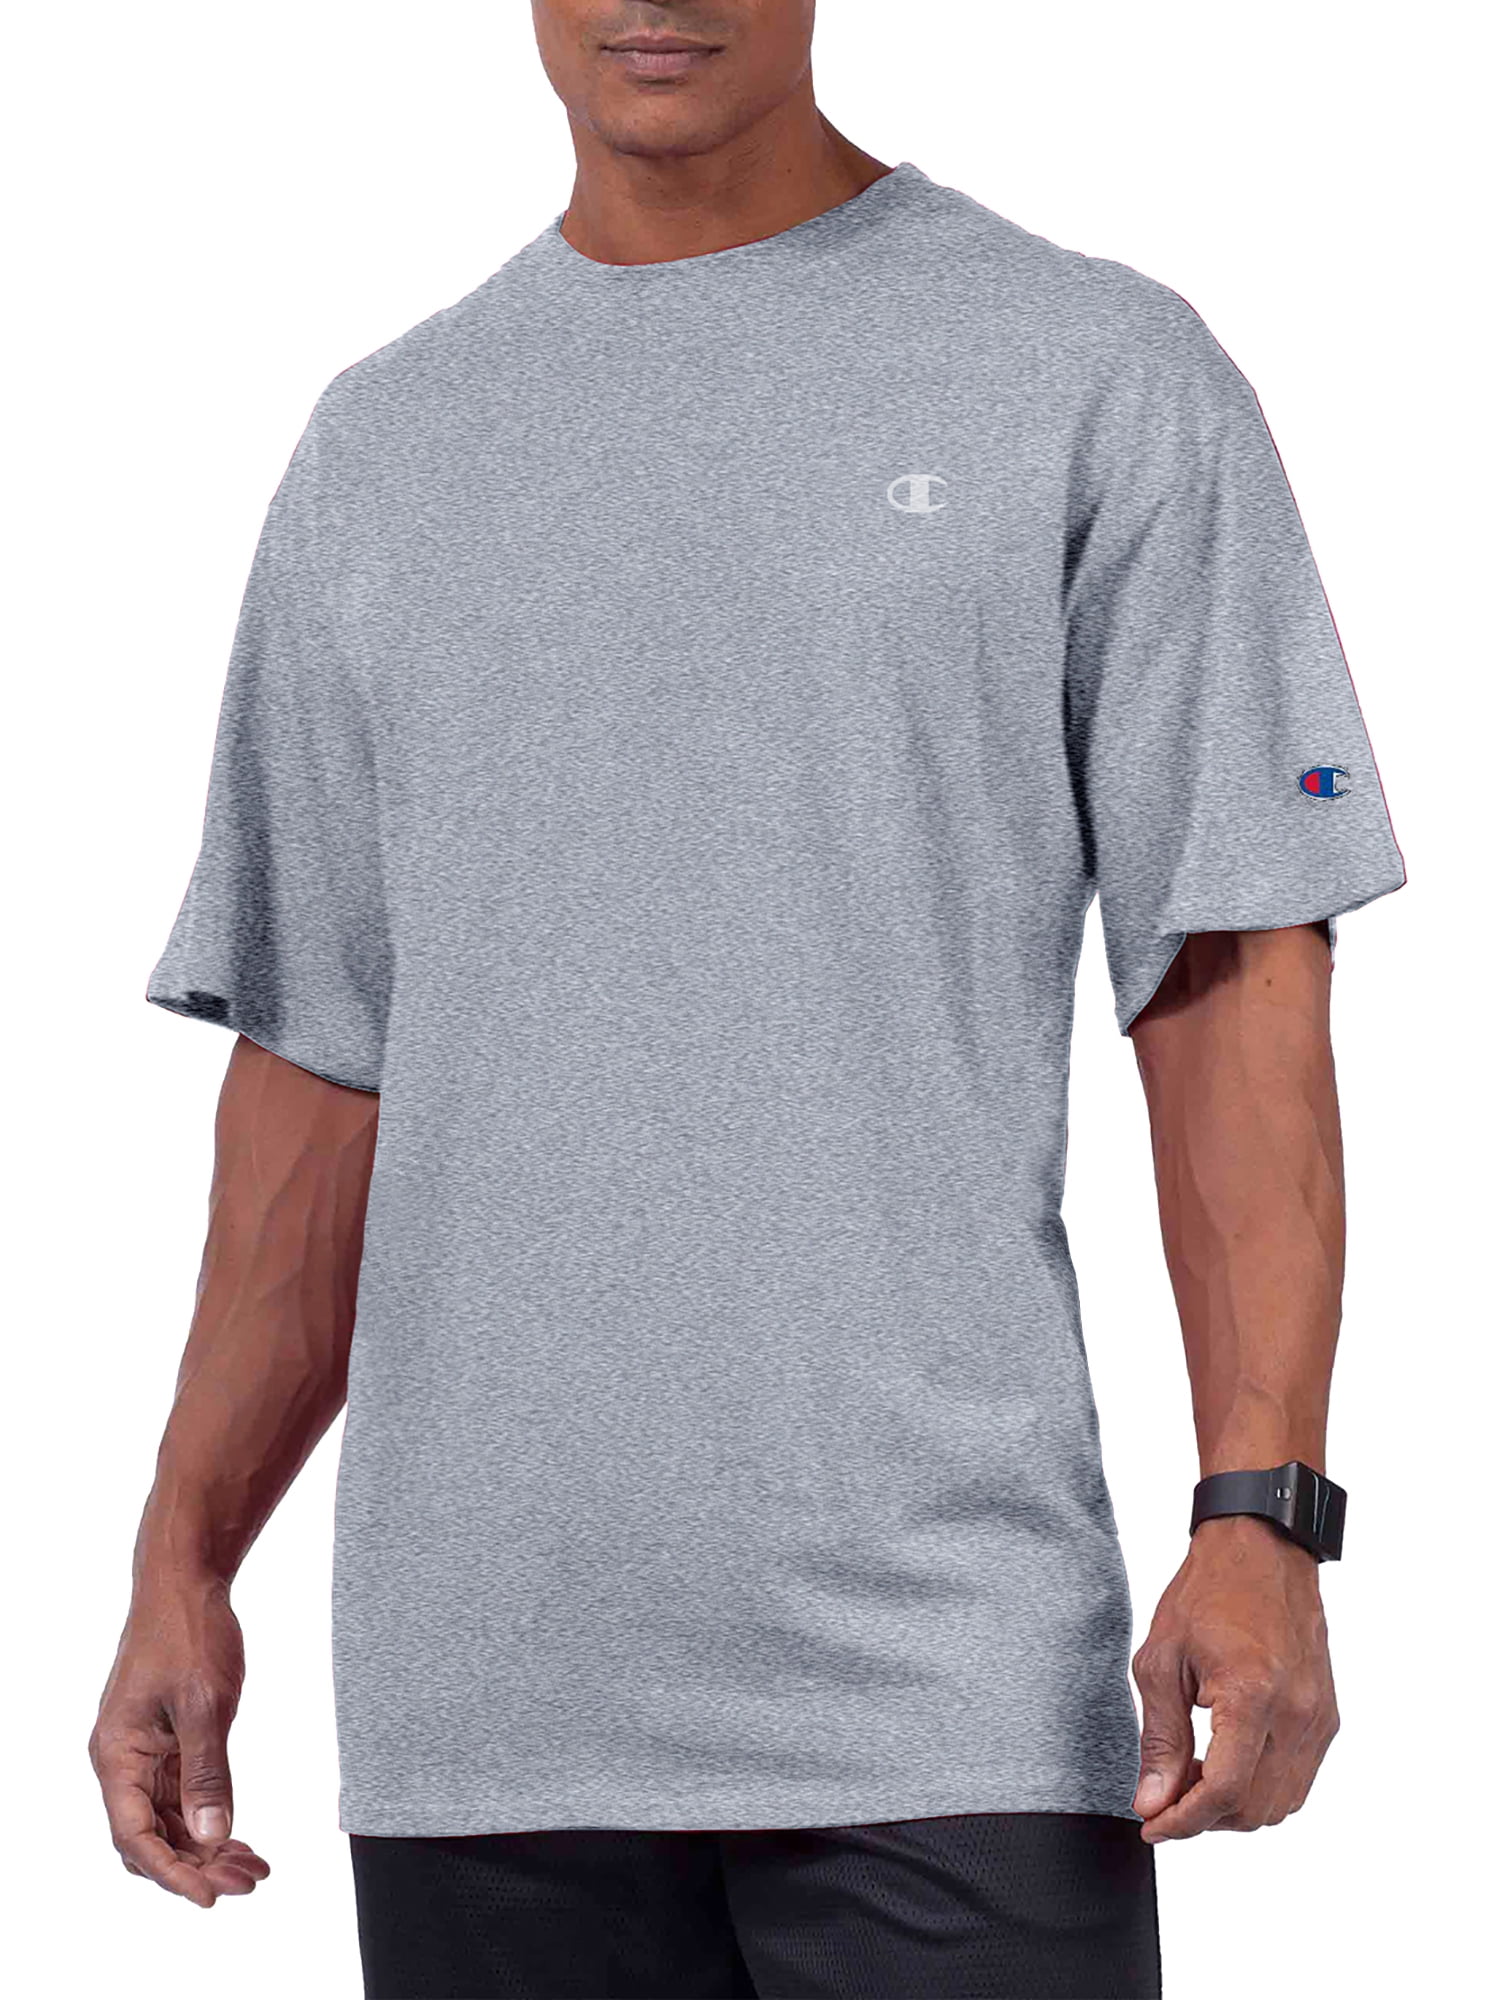 6XL Got Nerds Mens Tee Shirt Pick Size & Color Small